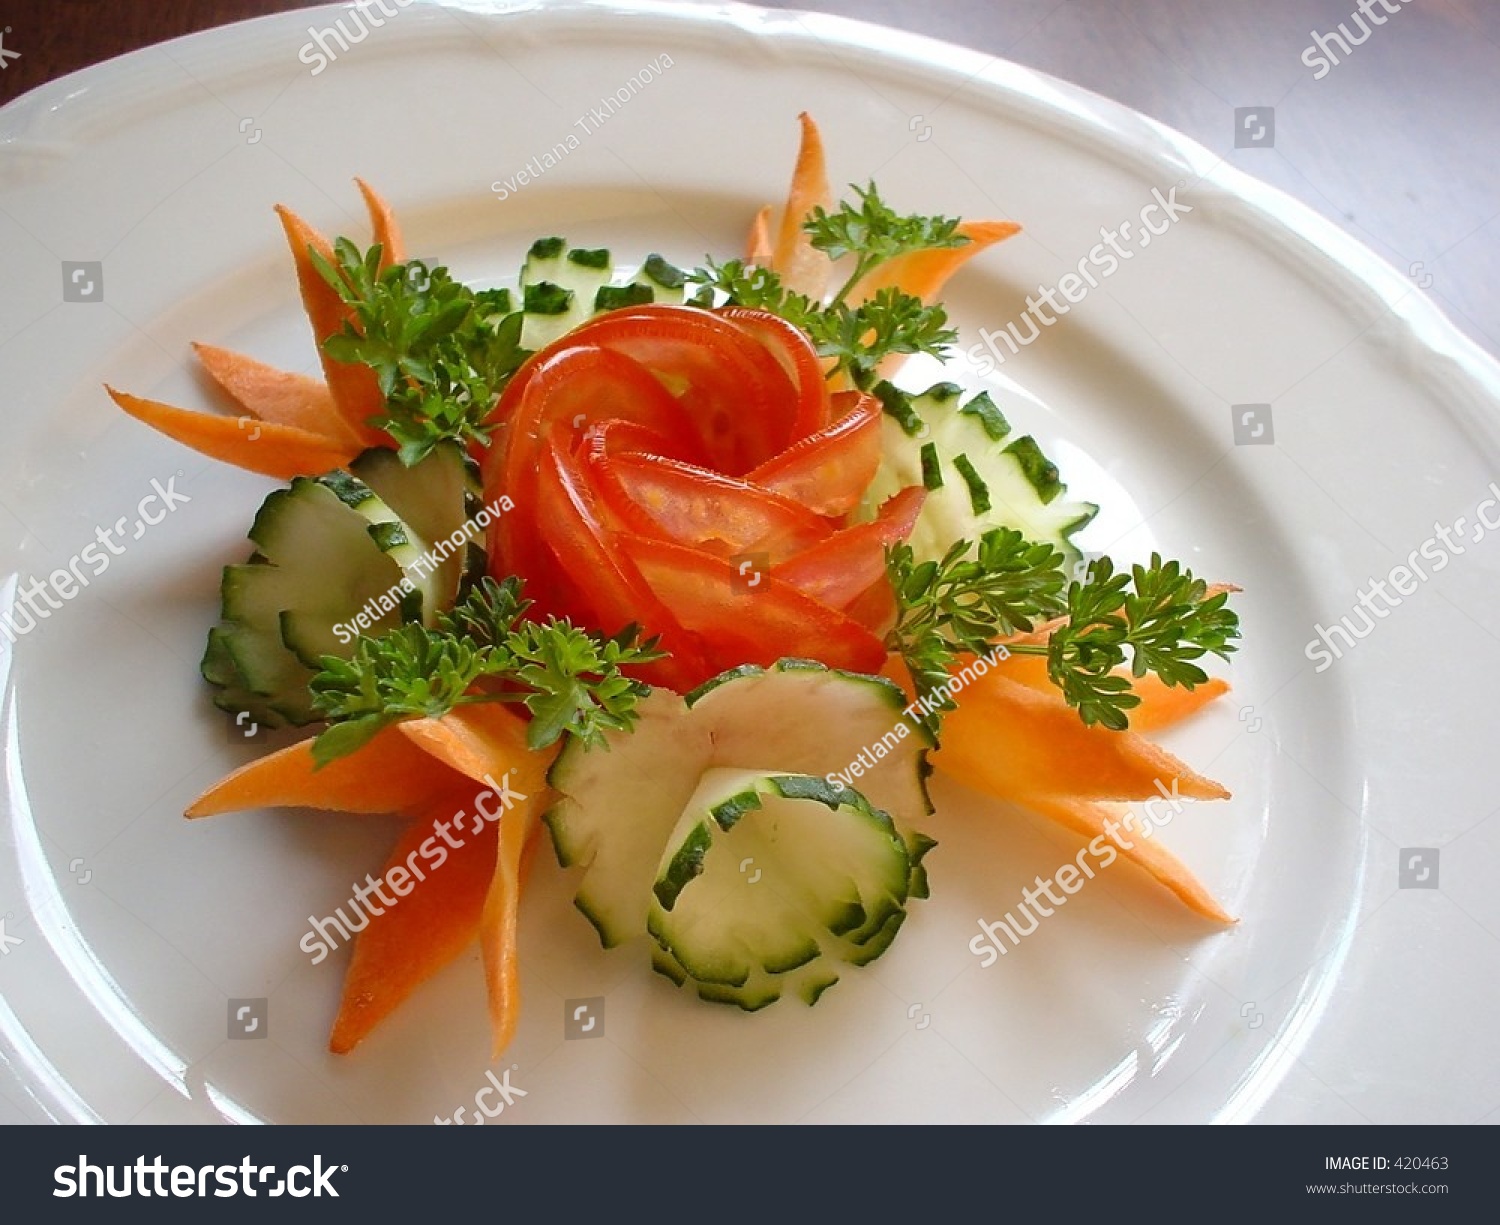 Нарезка из овощей в виде повара